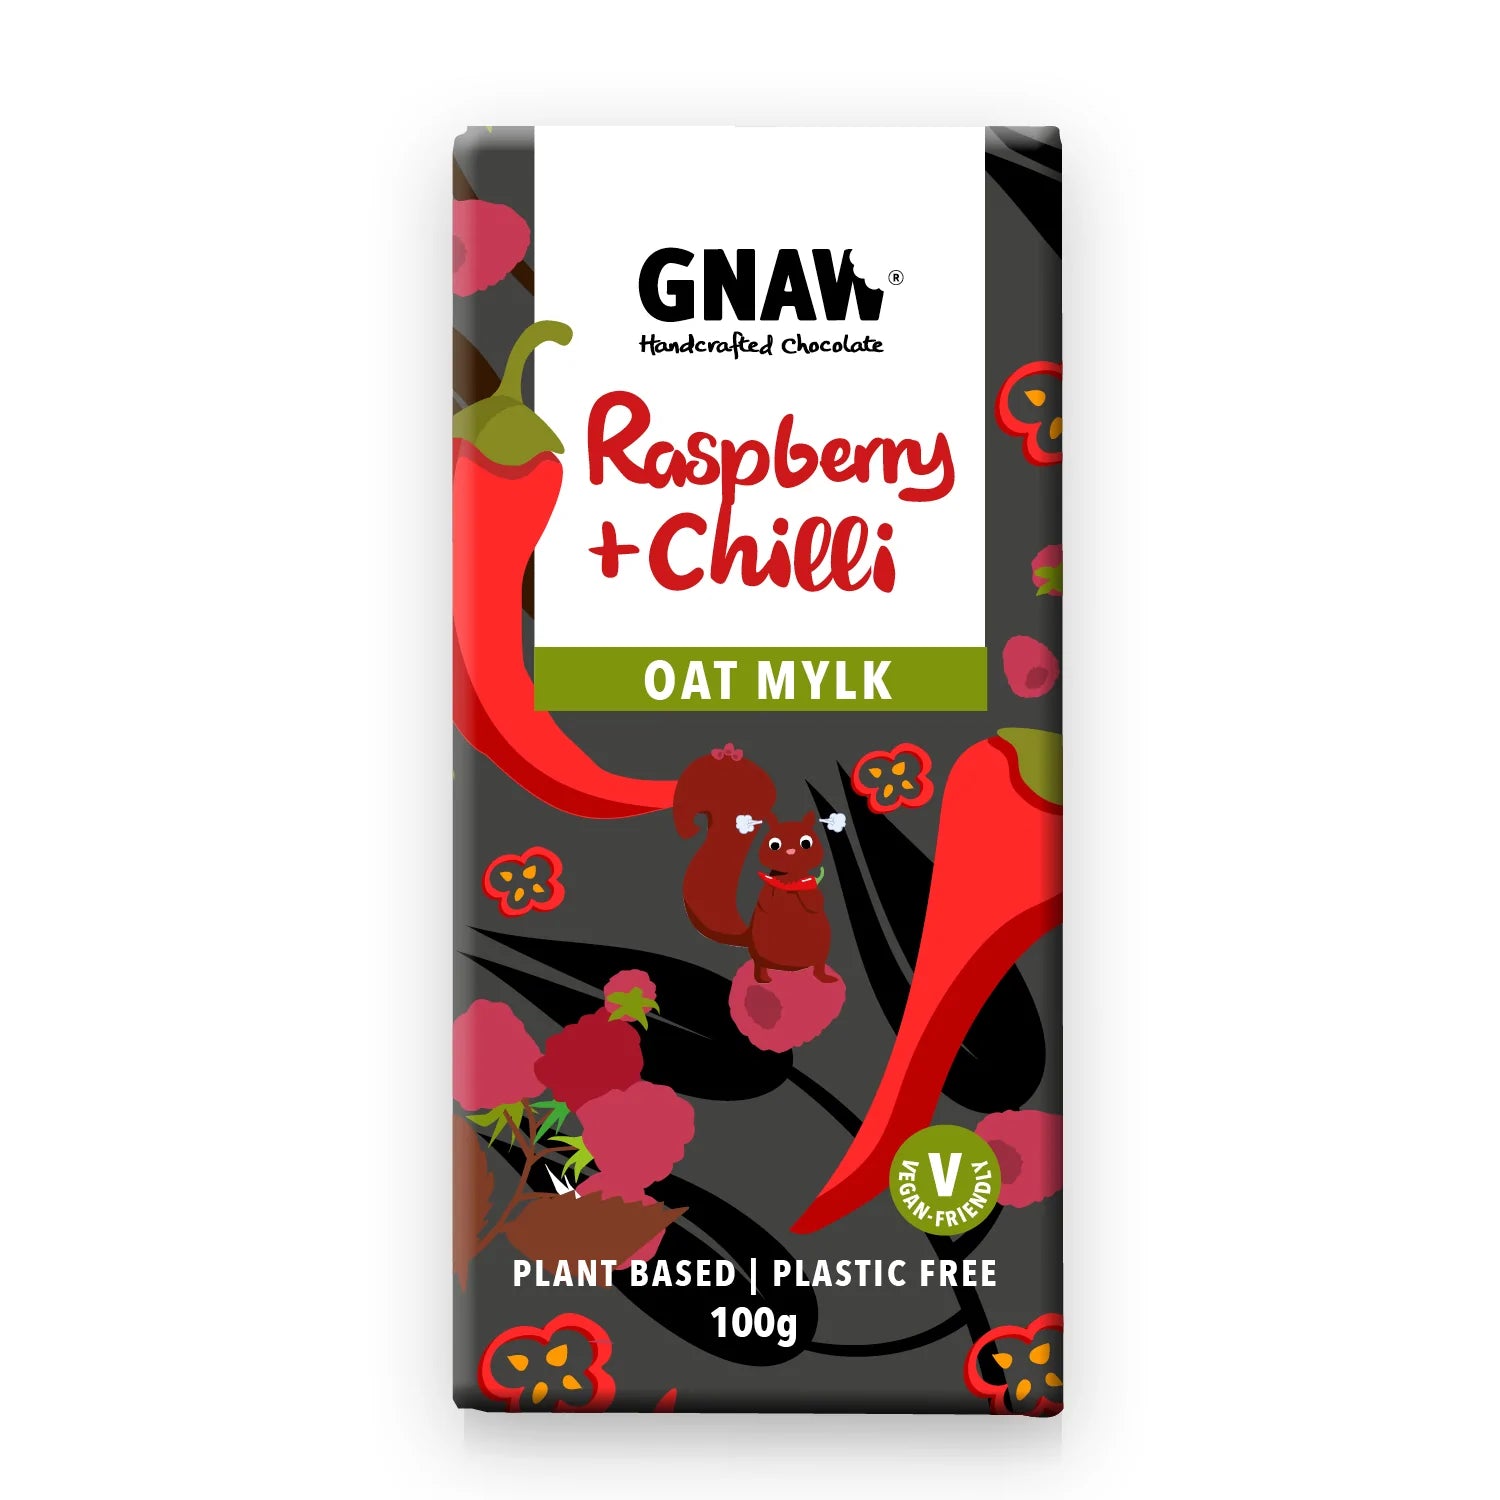 Gnaw Raspberry & Chilli Oat Milk Vegan Chocolate Bar